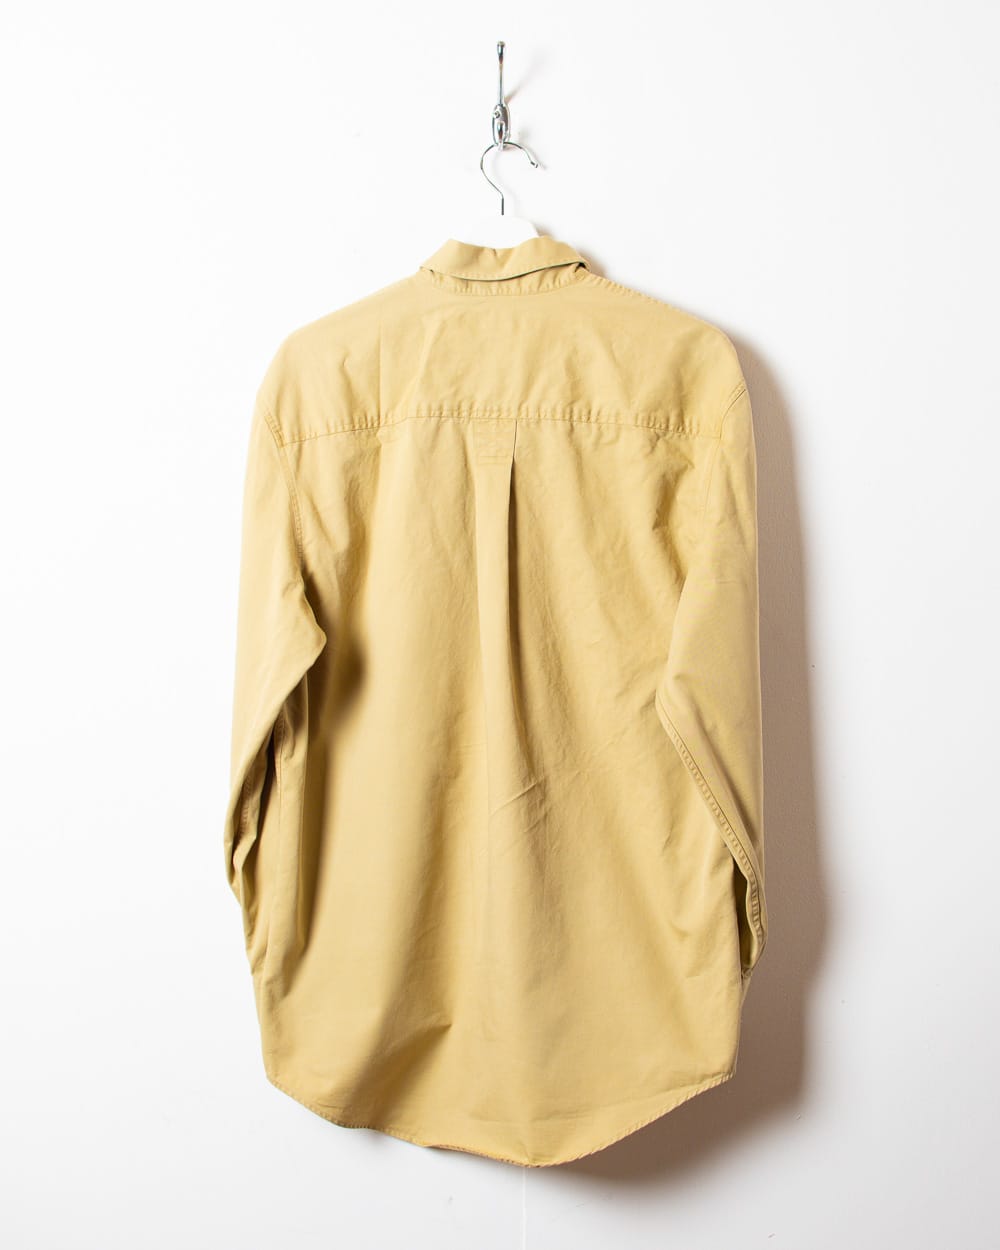 Neutral Timberland Shirt - Small